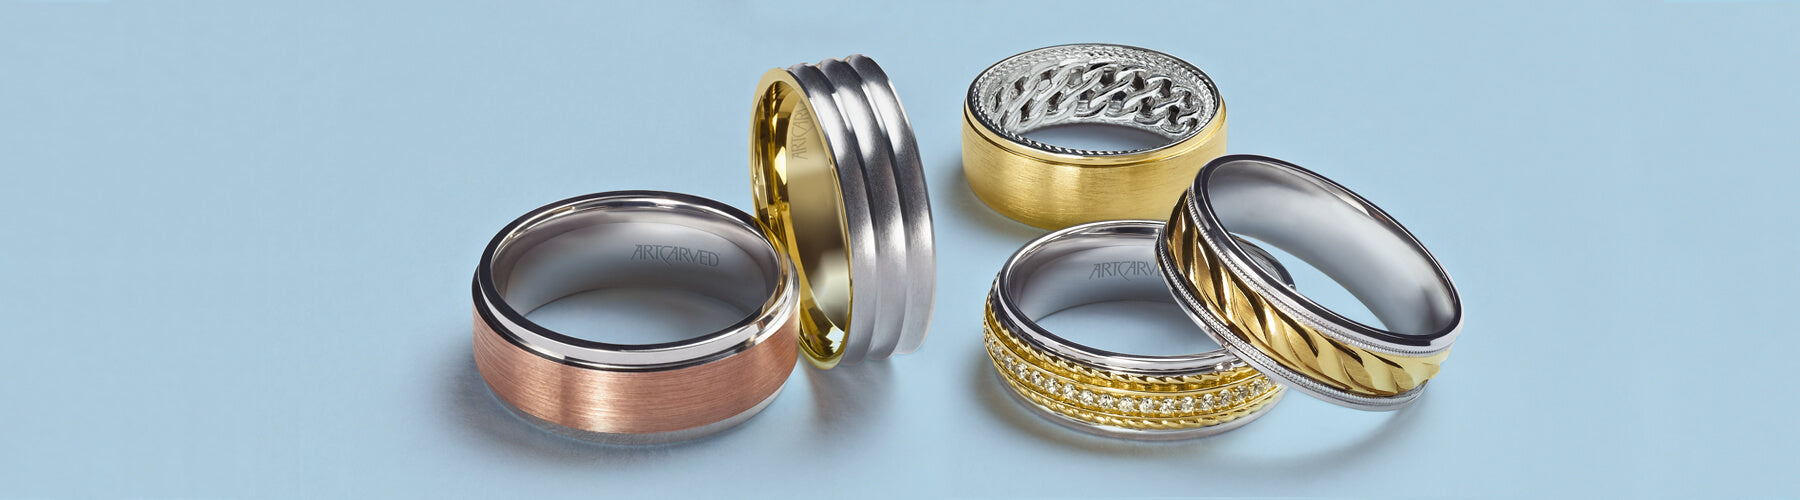 Male diamond ring stock photo. Image of gift, gold, wedding - 16215474